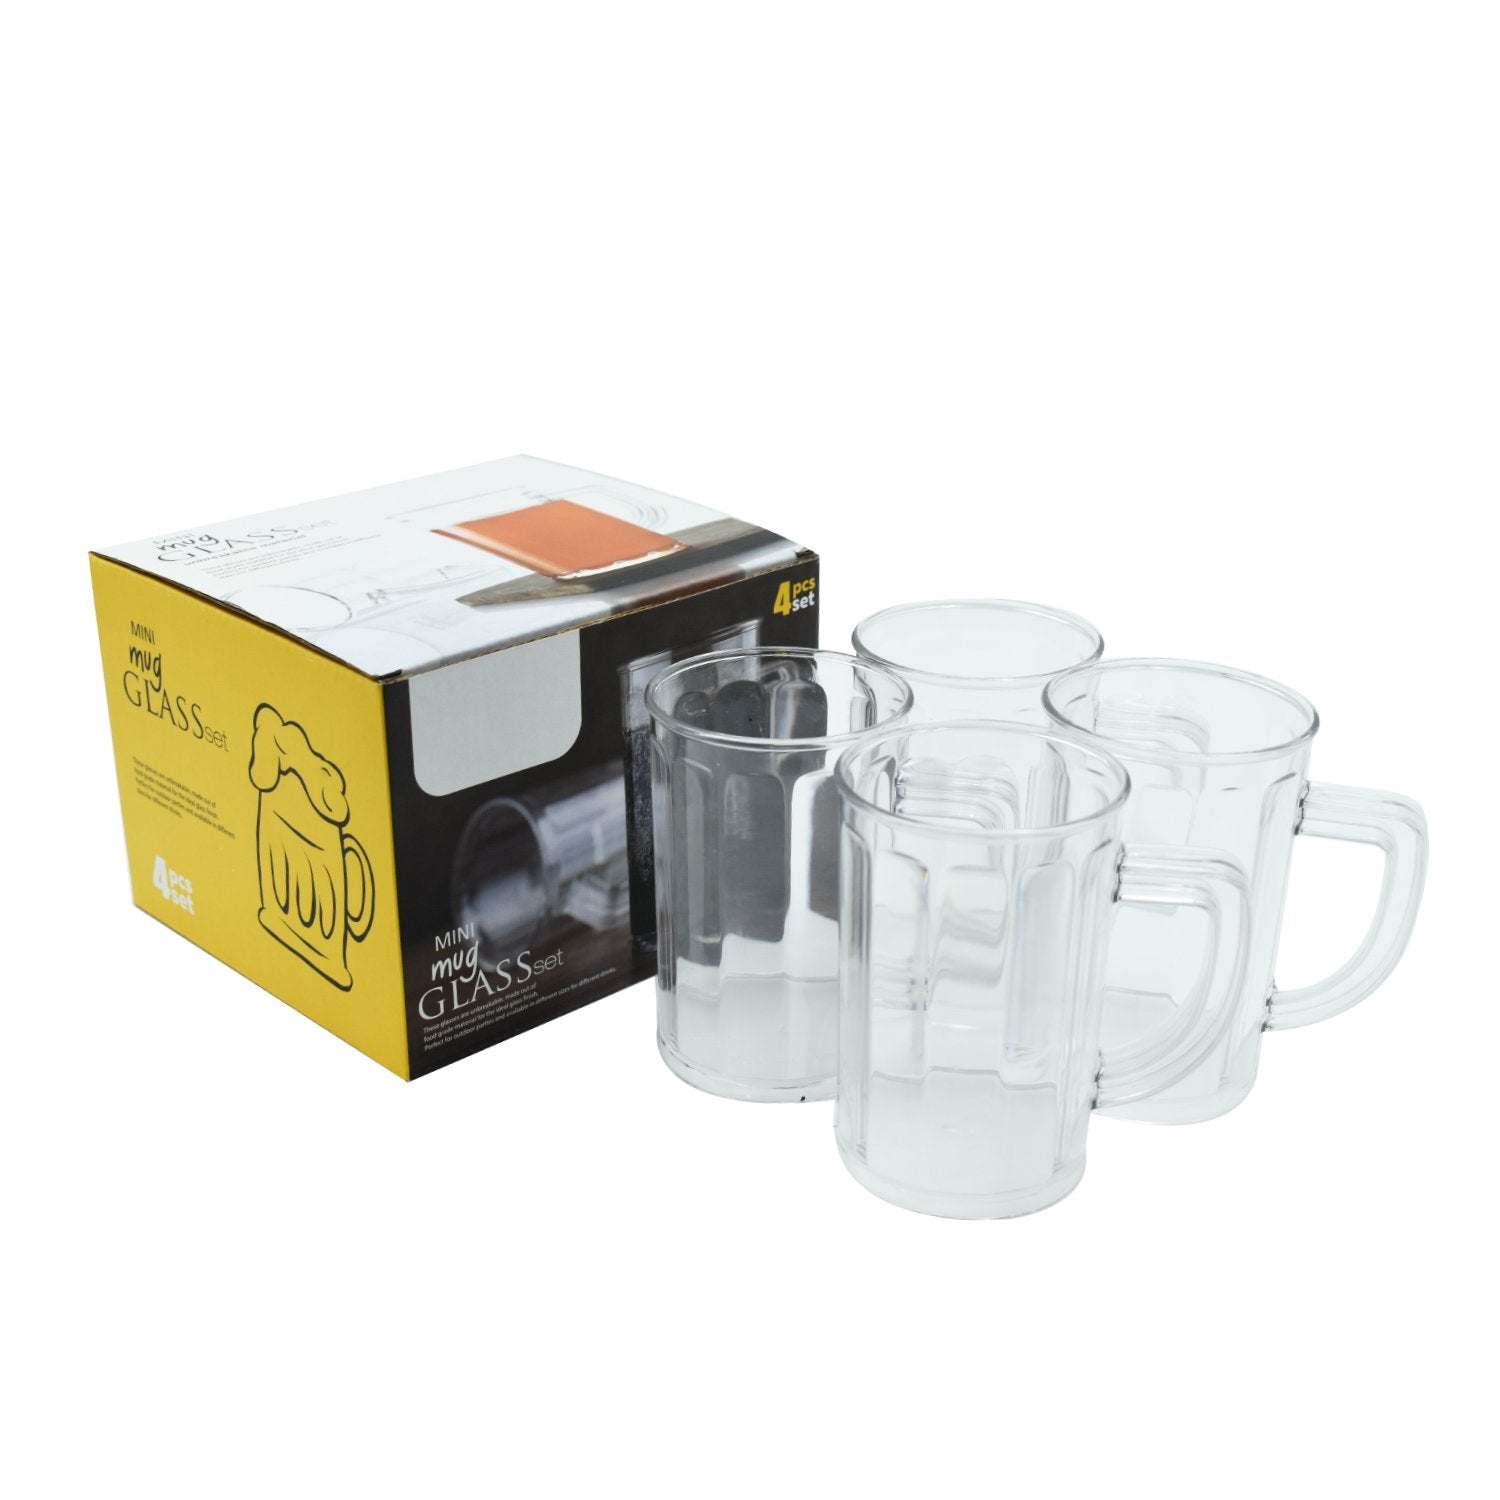 2409 Unbreakable Drinking Plastic Type Glass Set, Beer Mug, Set of 4 PCs, Transparent - SkyShopy